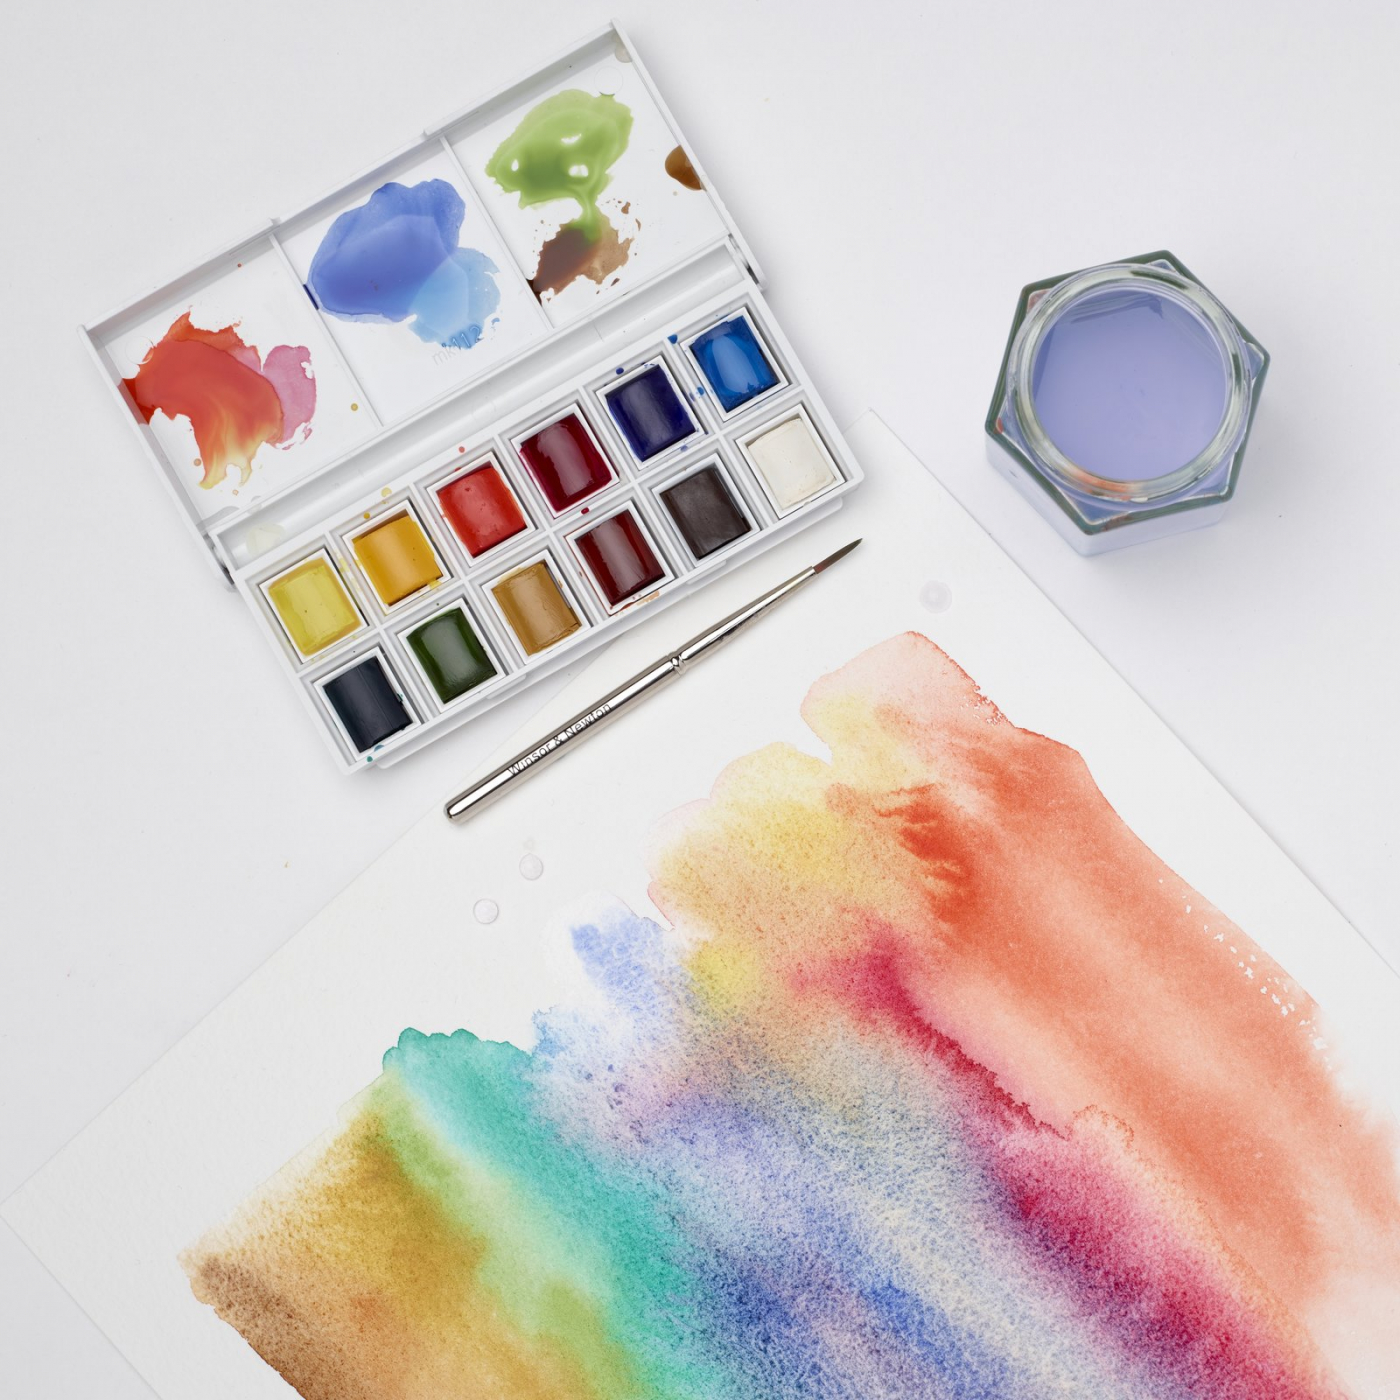 Cotman Water Colors Sketchers Pocket Box in the group Art Supplies / Colors / Watercolor Paint at Pen Store (107243)